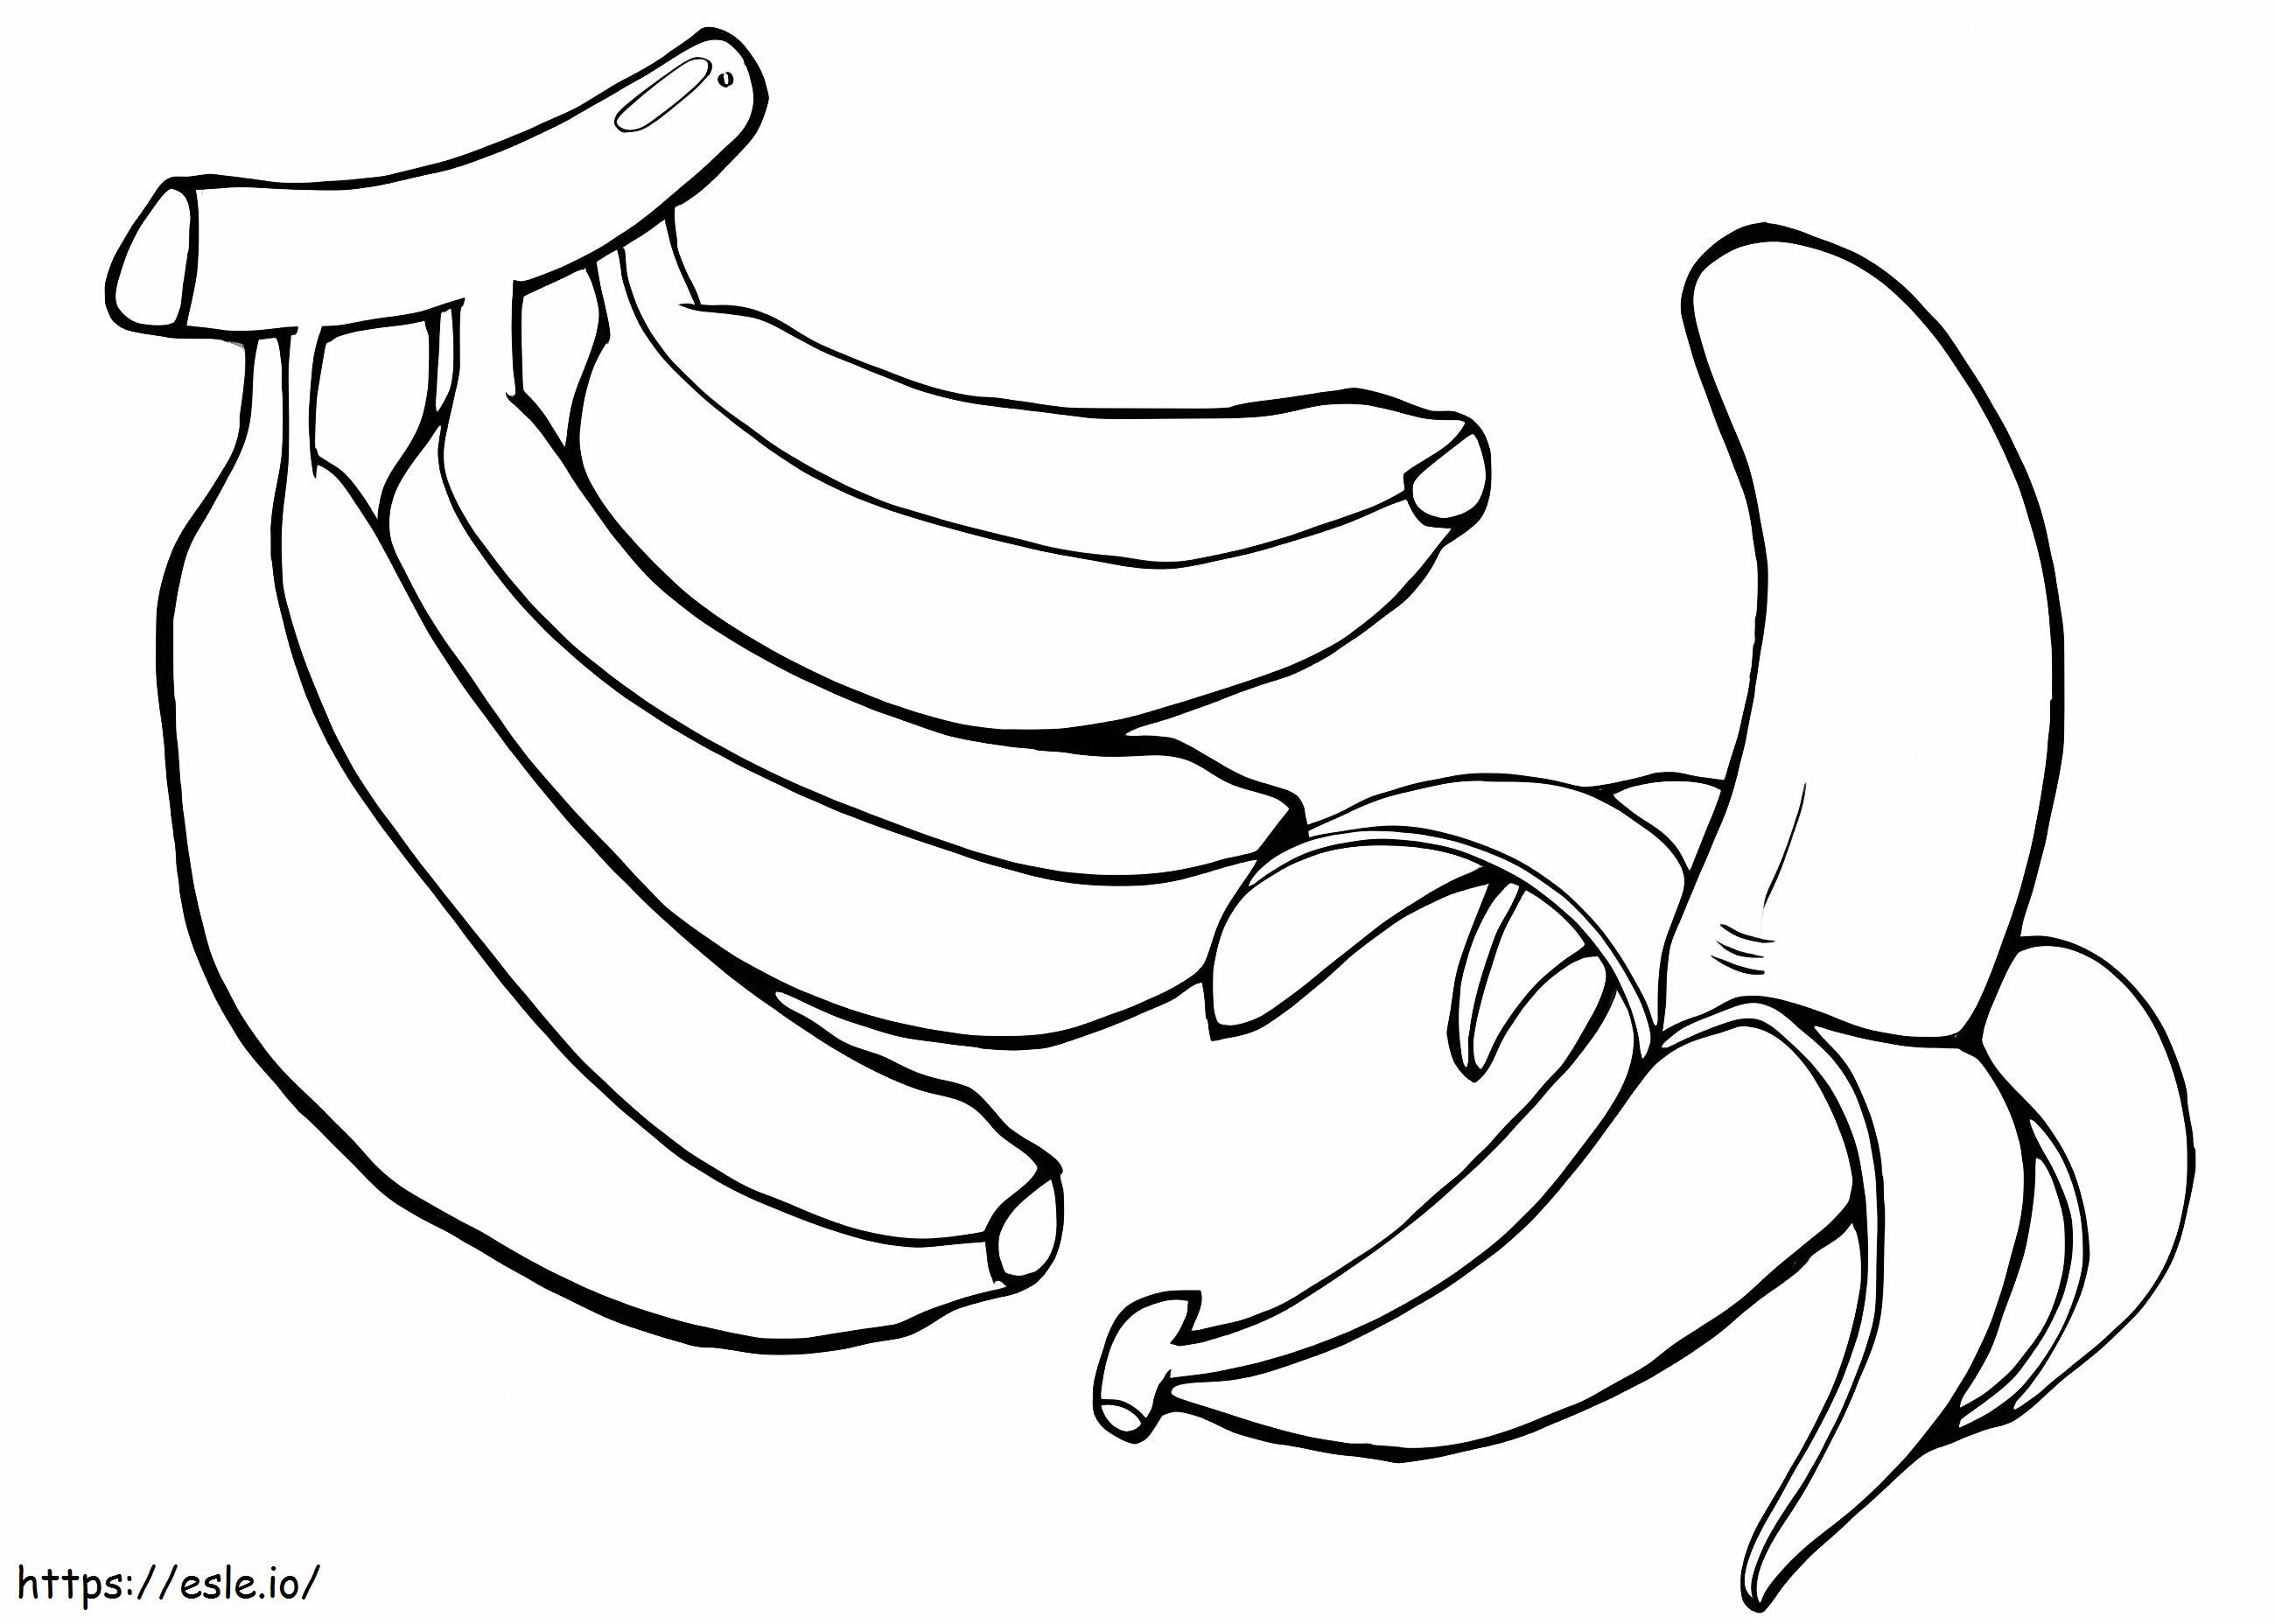 Cacho de bananas e uma banana descascada para colorir